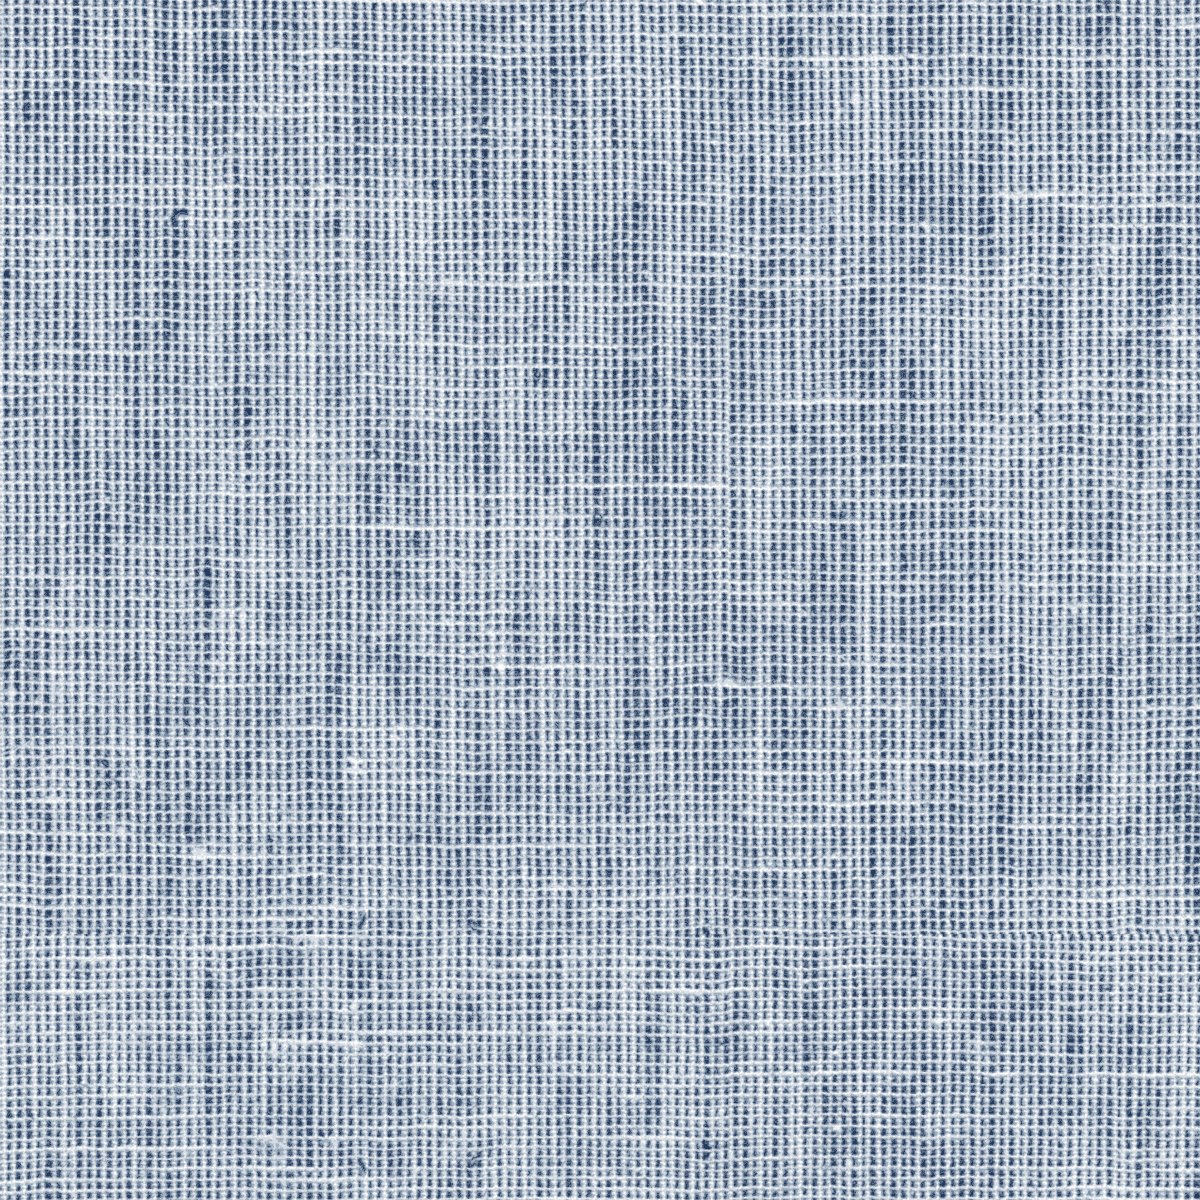  Navy Blue/White Textured Linen